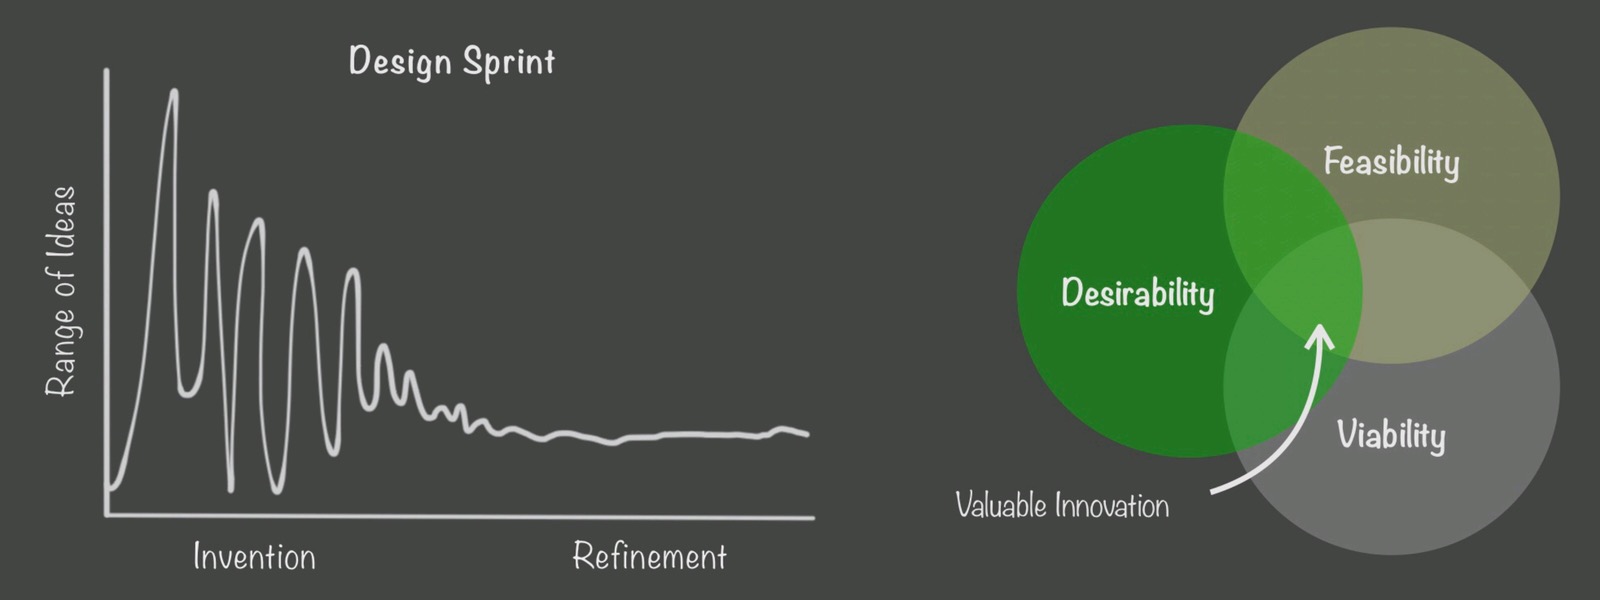 Design Sprint Graphic